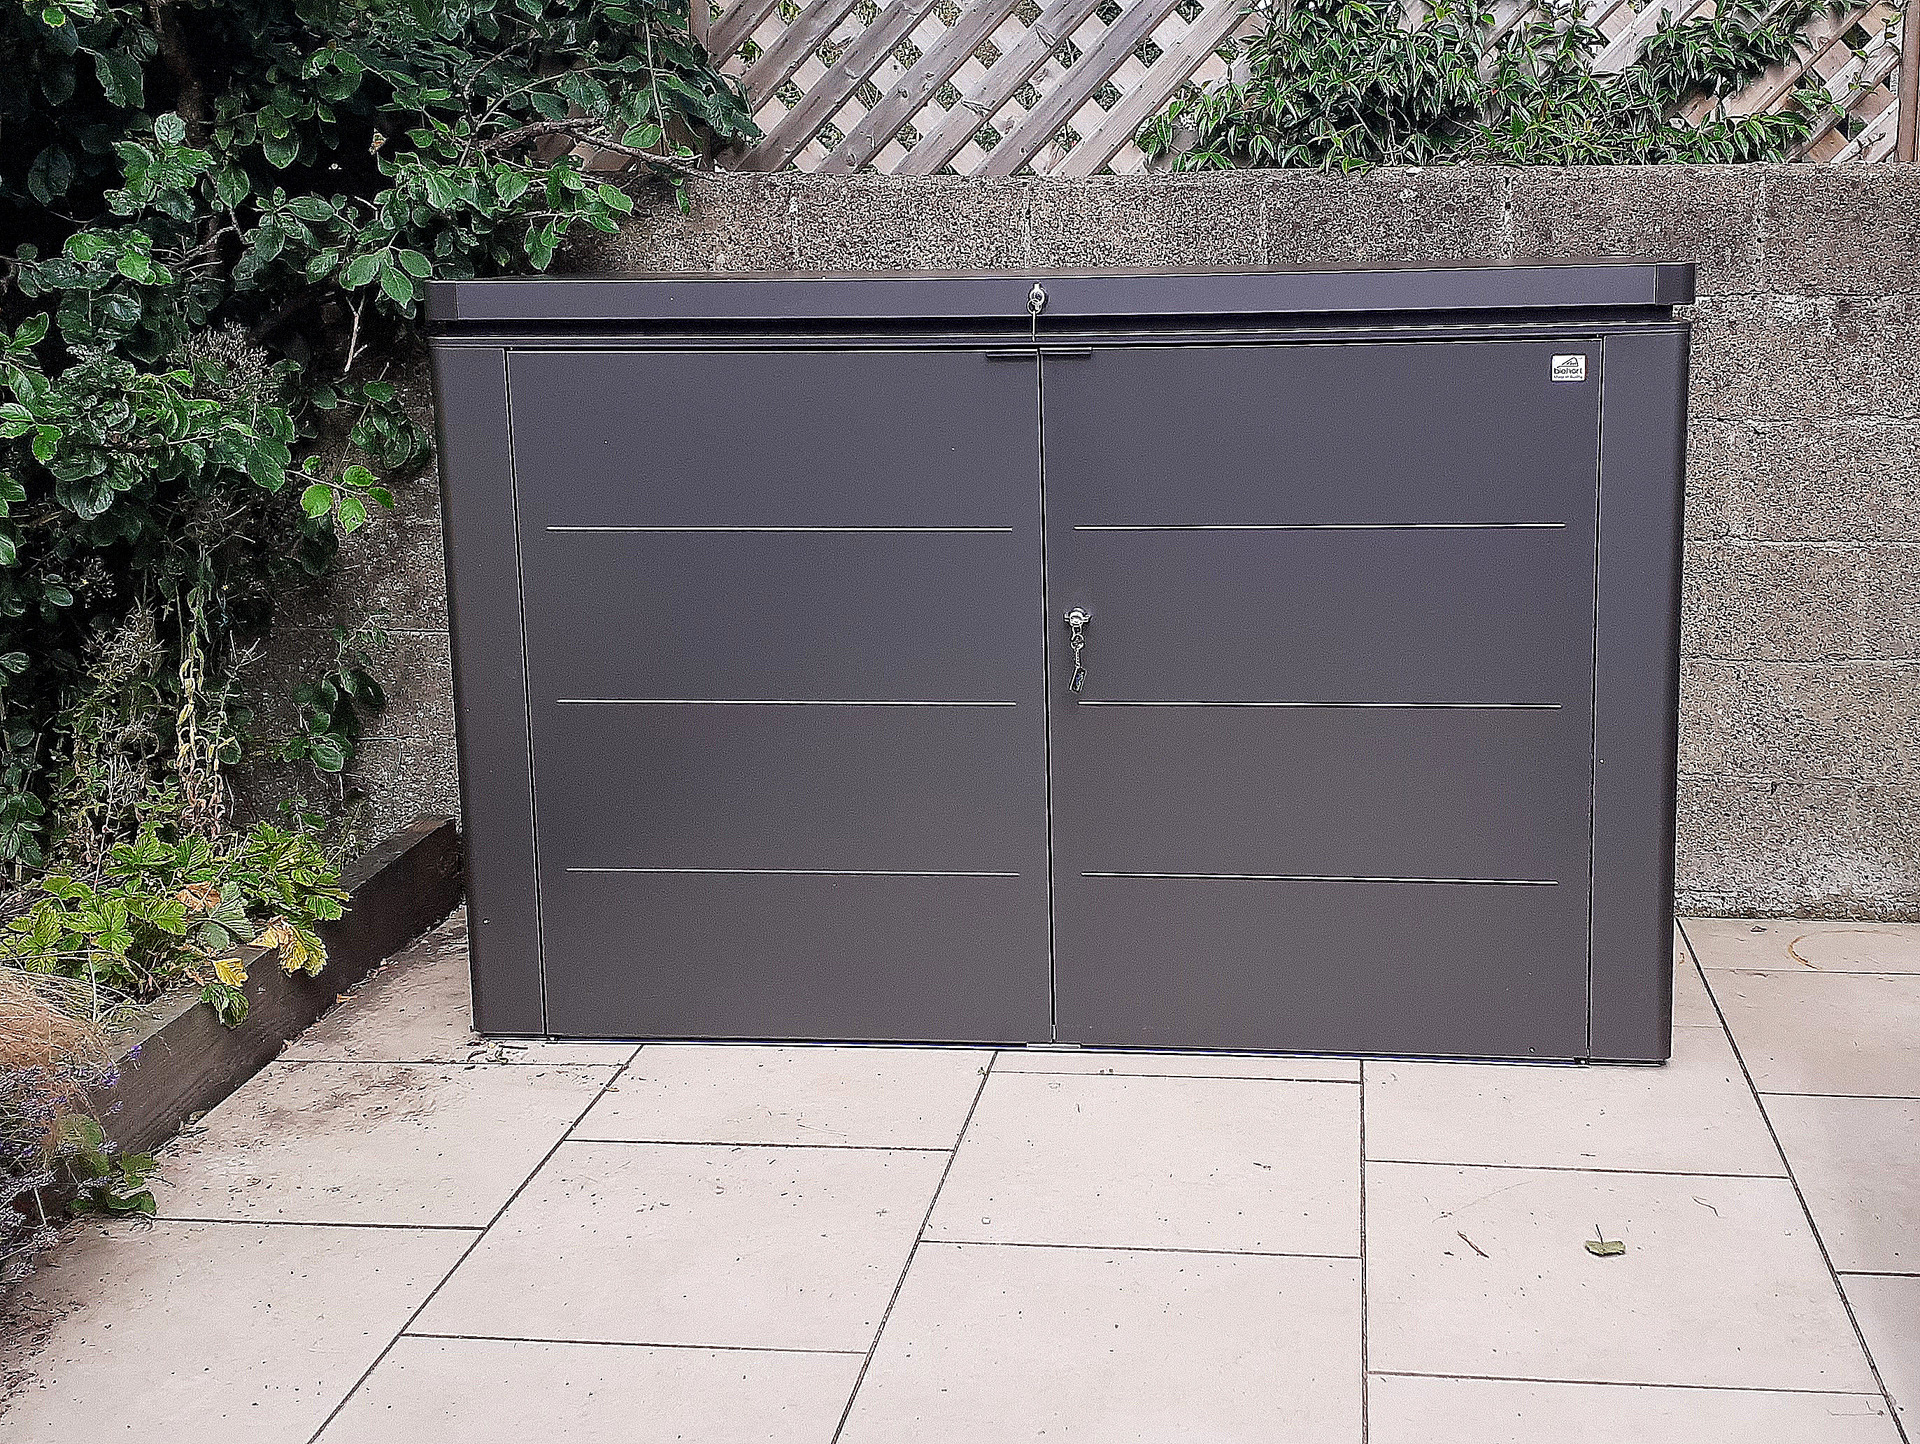 Biohort HighBoard 200 Garden Storage Unit in metallic dark grey, supplied + fitted in Blackrock, Co Dublin  | Owen Chubb Garden Landscapers